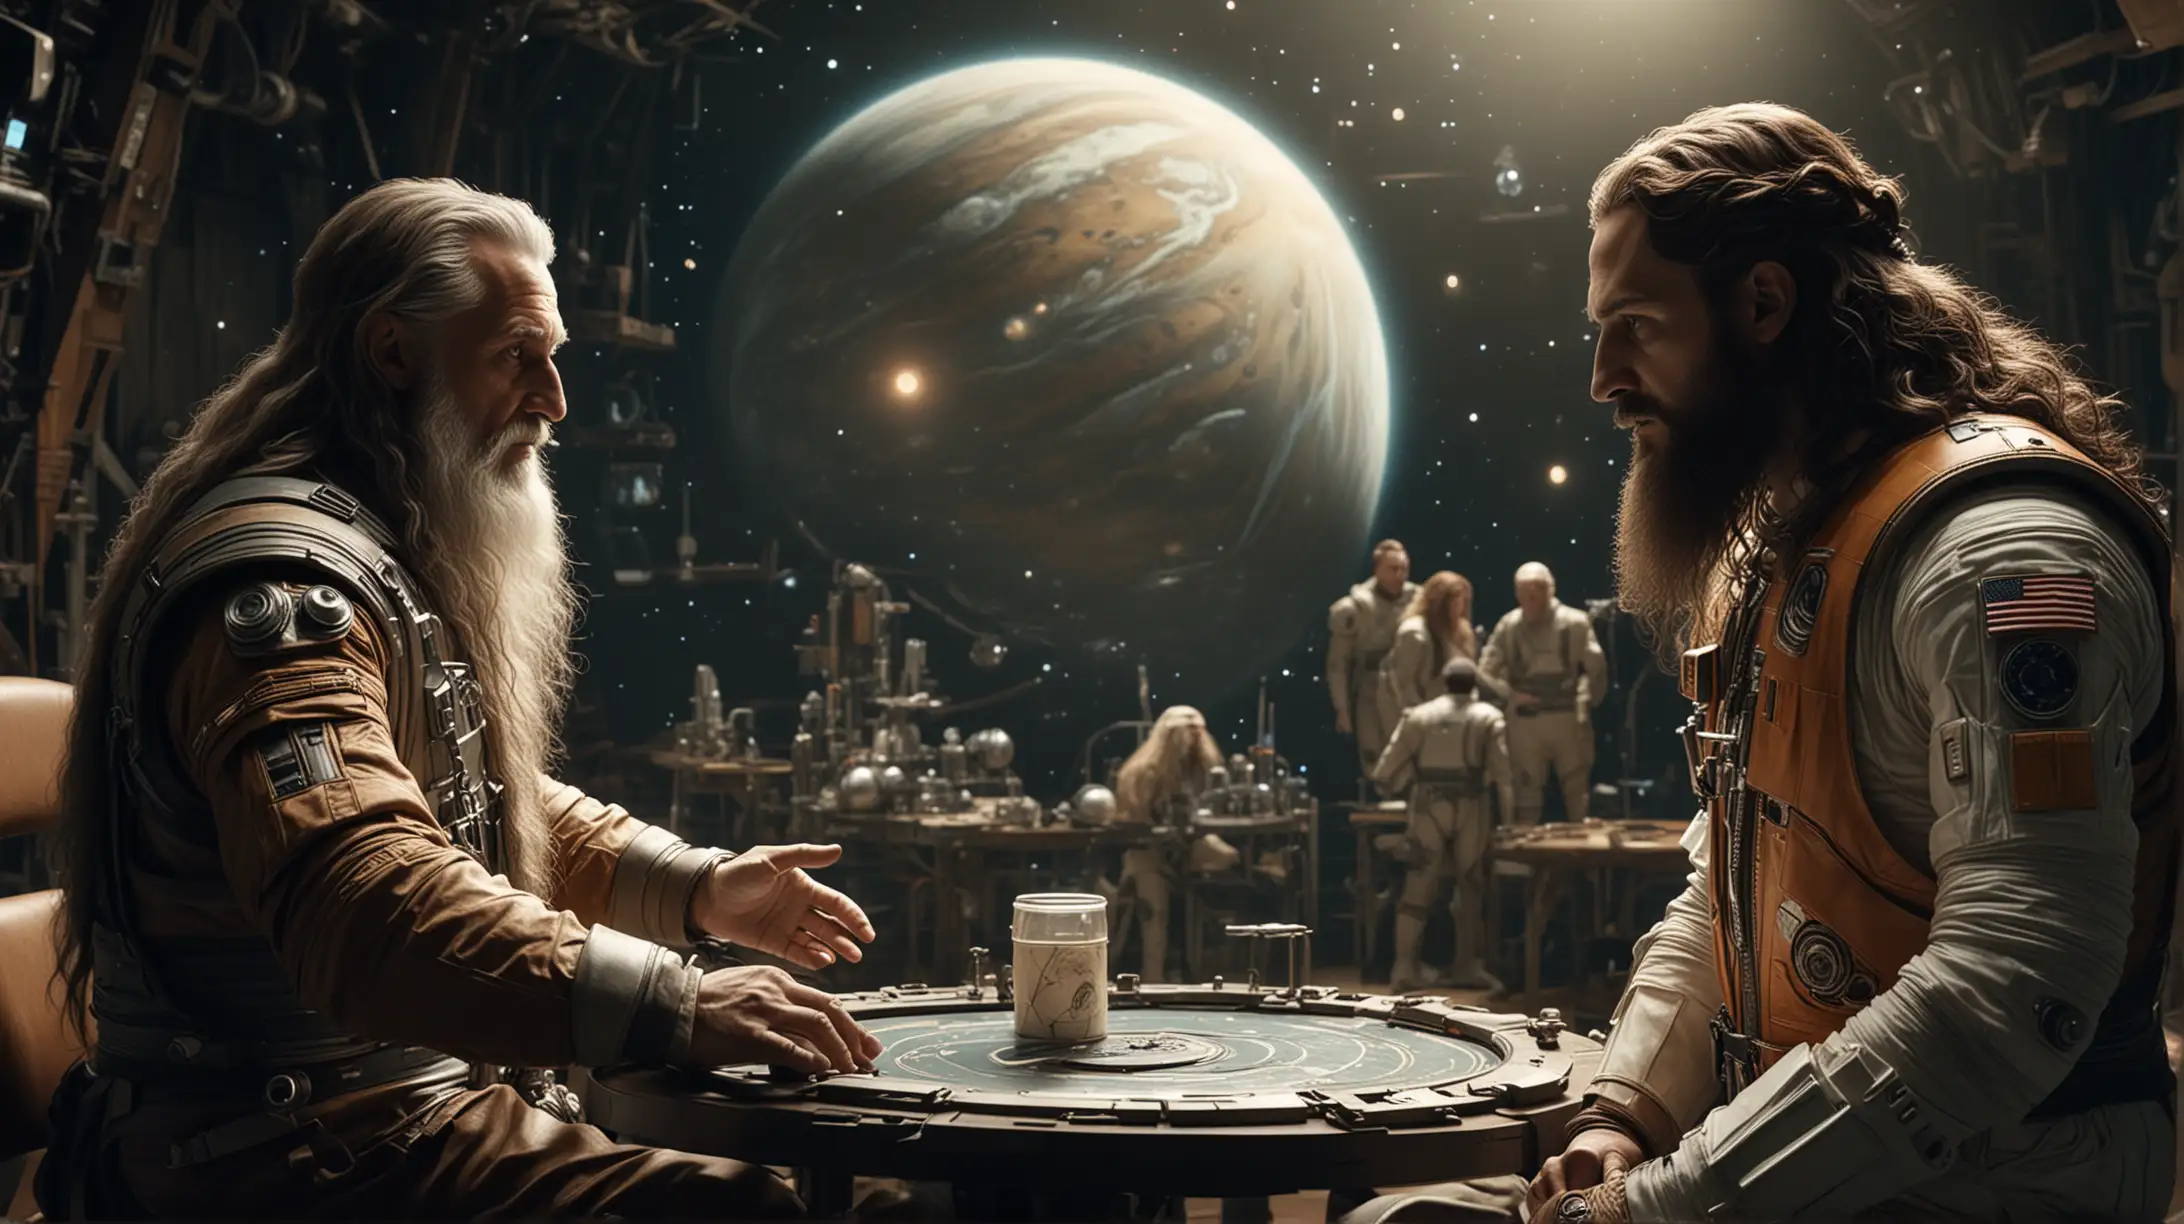 Create a scene featuring Leonardo da Vinci conversing with a modern interstellar astronaut in his studio. Cinematic